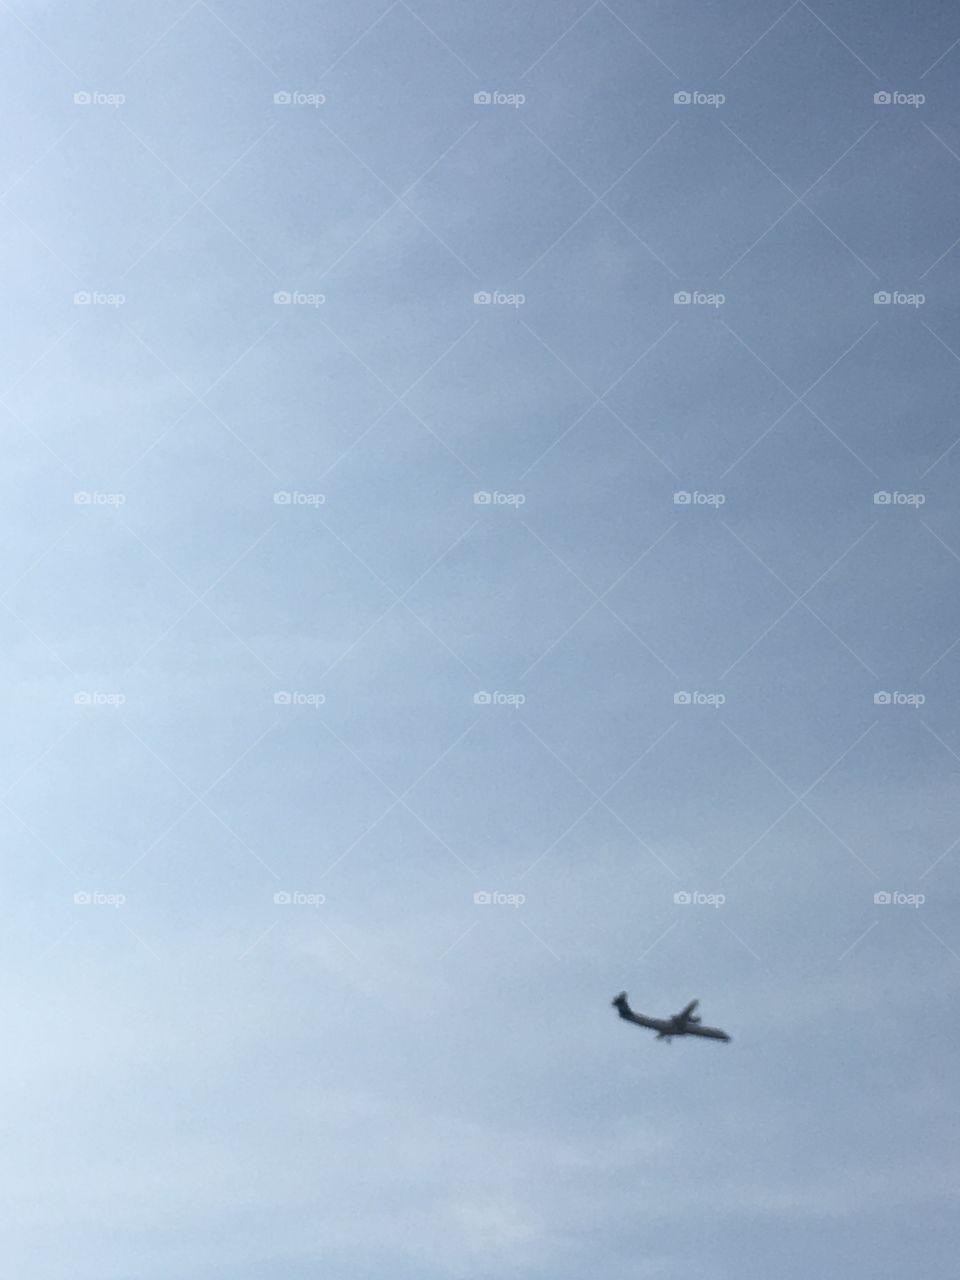 Airplane flying overhead 